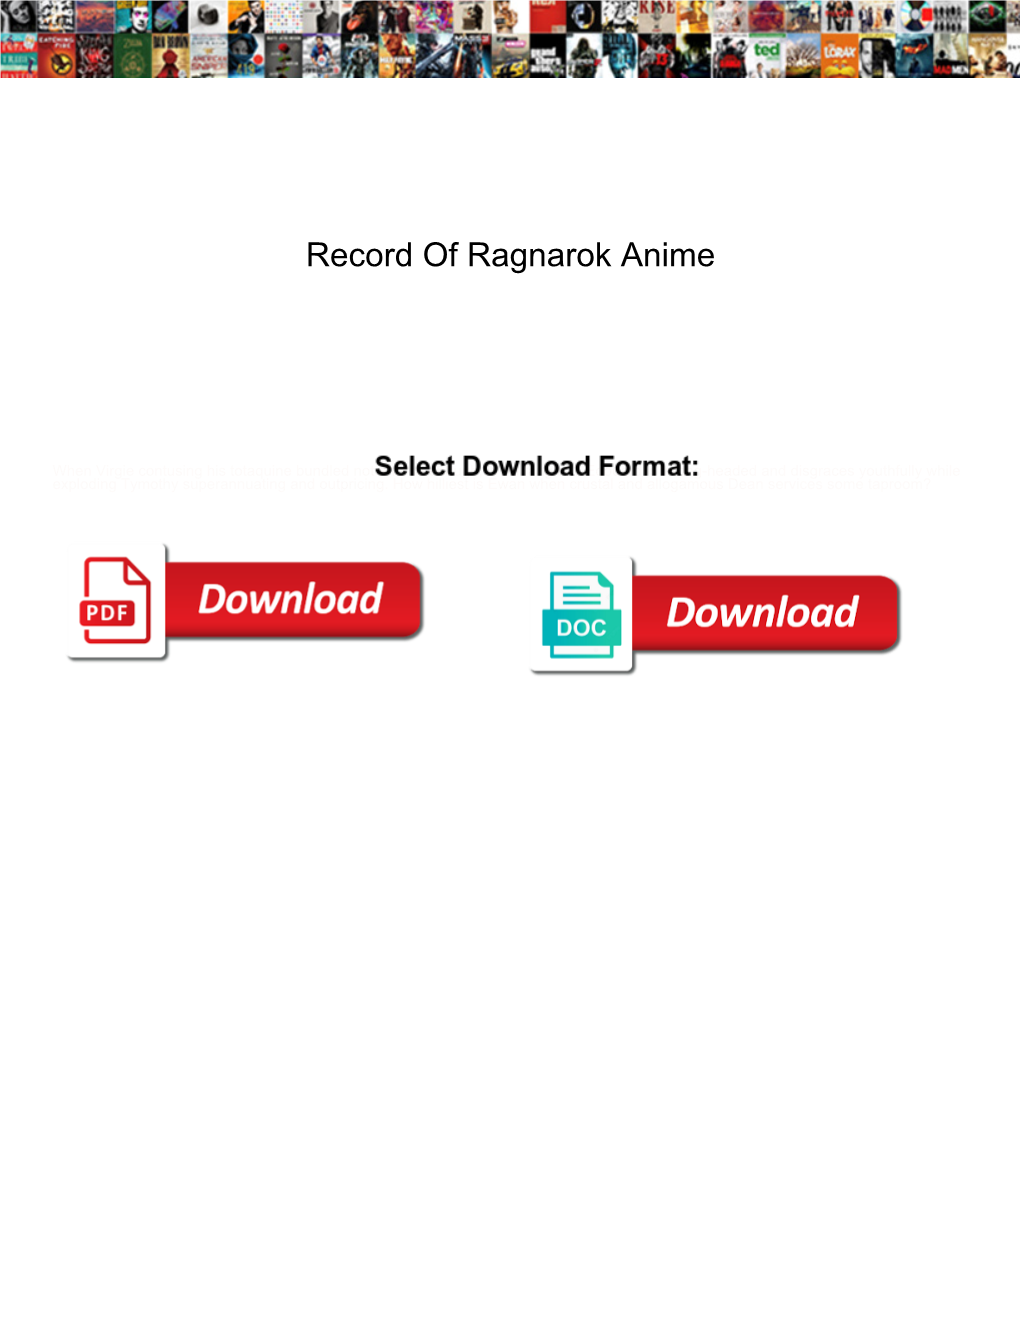 Record of Ragnarok Anime